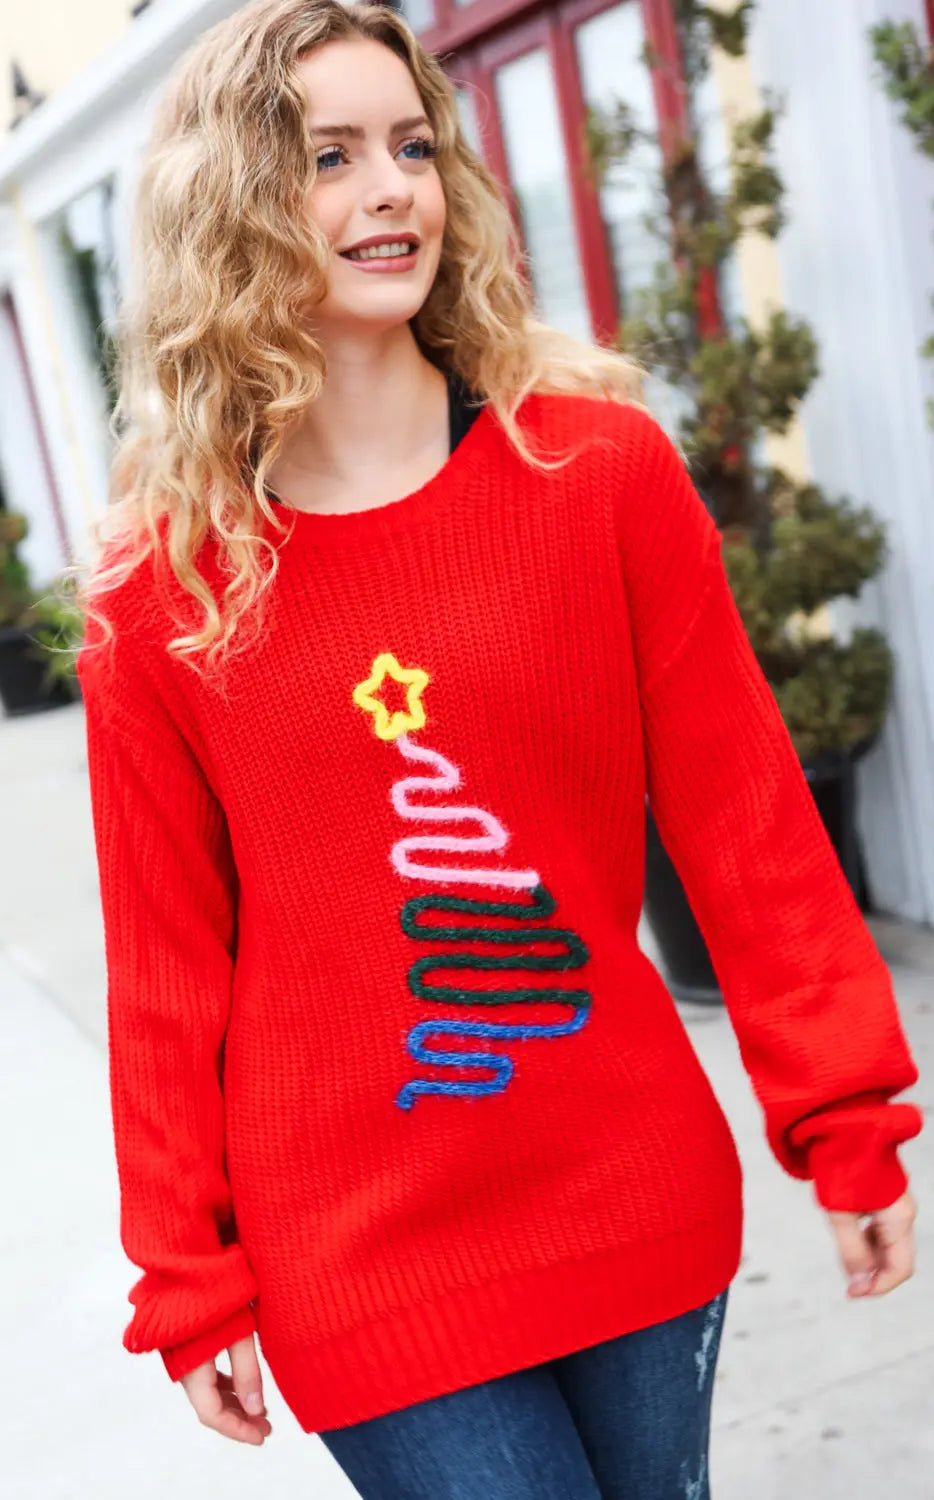 Haptics All I Want Red Christmas Tree Lurex Embroidery Sweater Haptics